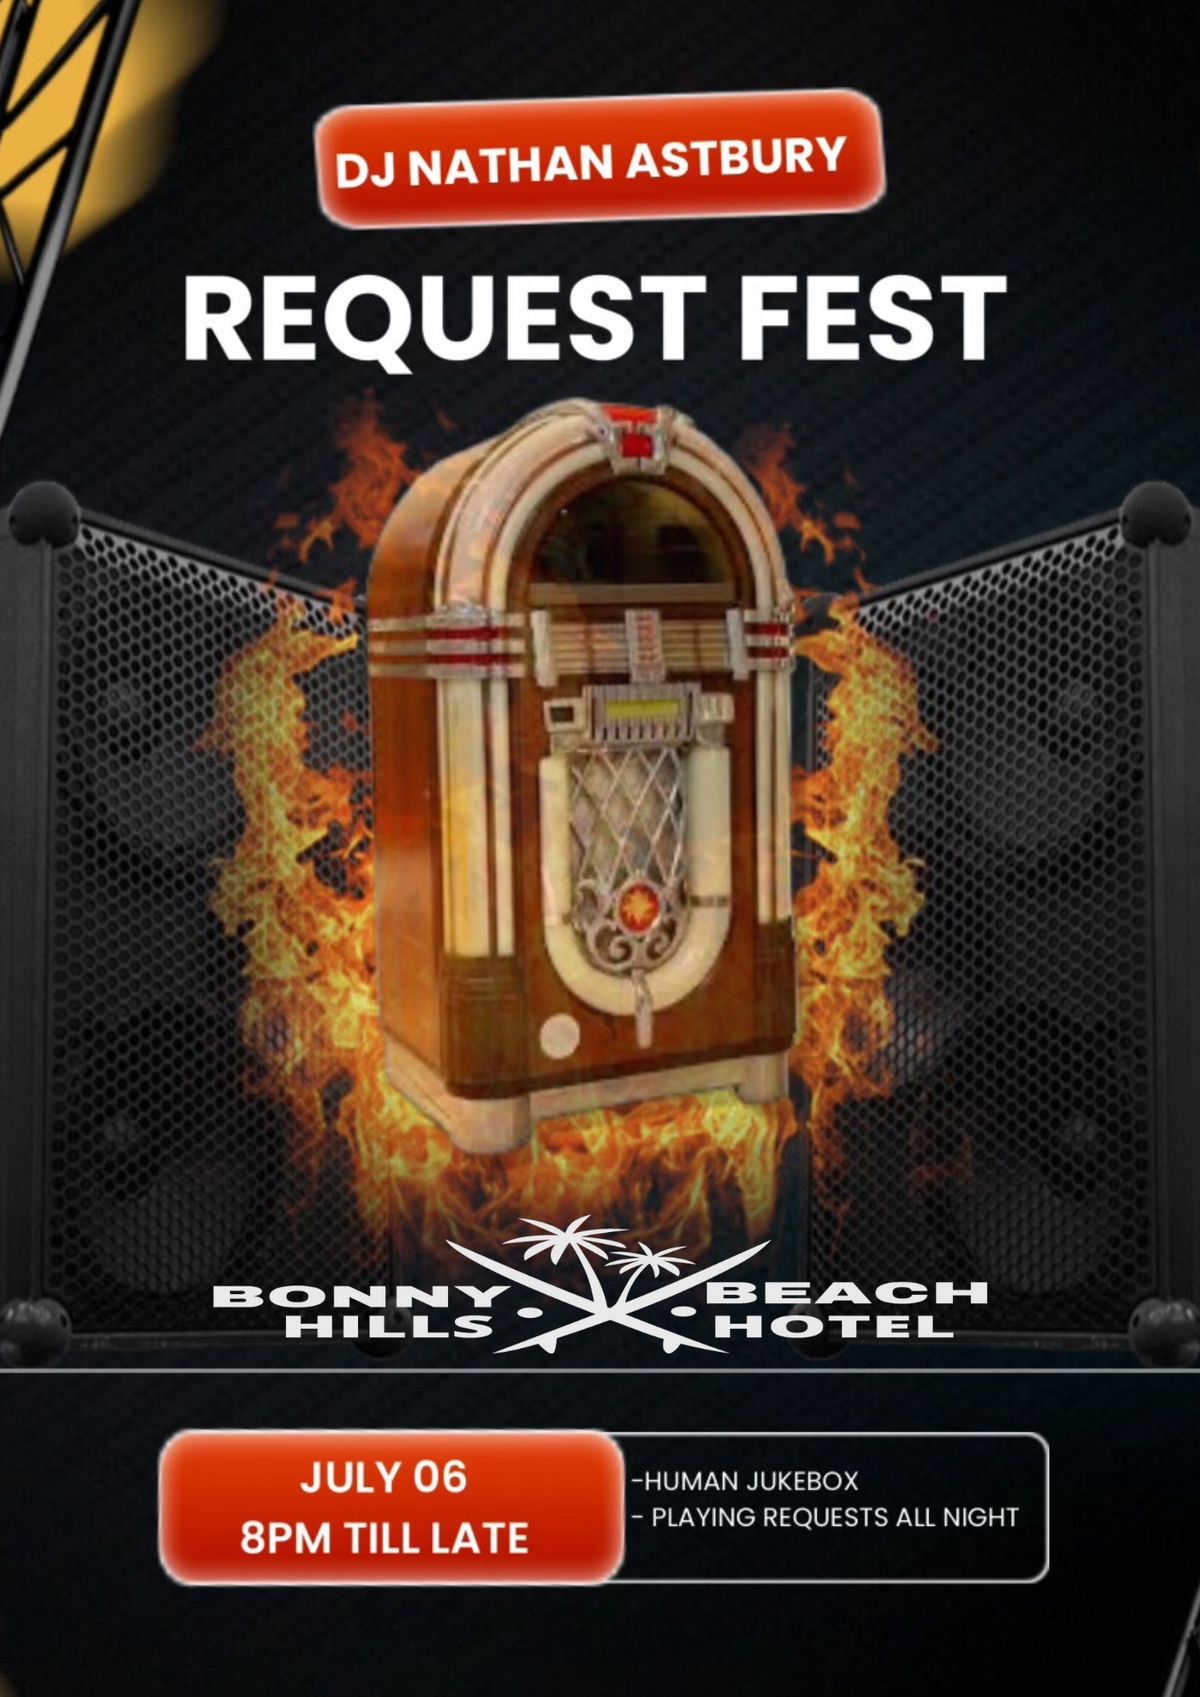 DJ Nathan Astbury - Request Fest